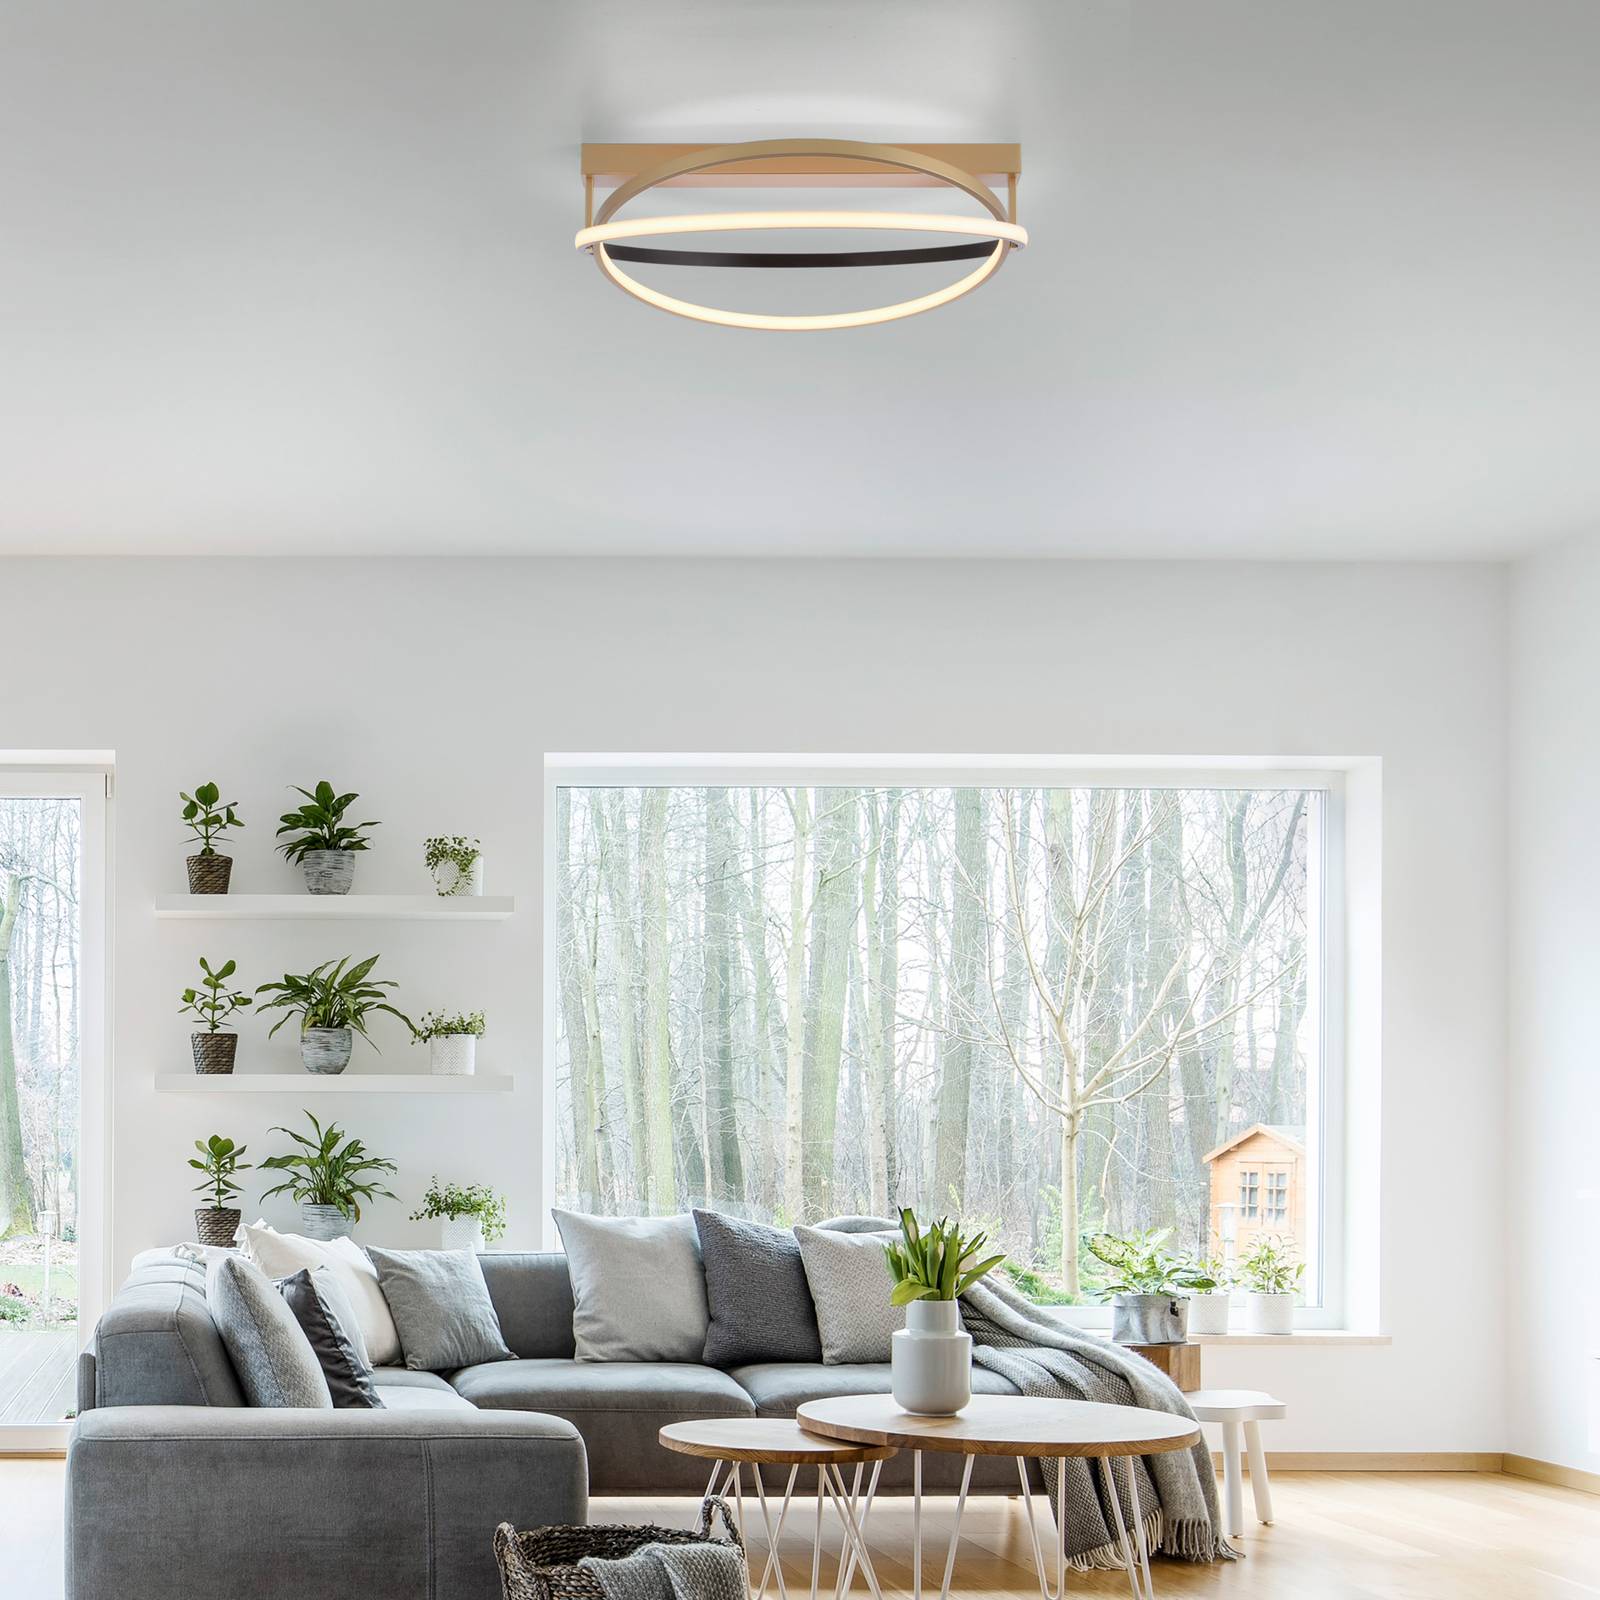 Image of Q-Smart-Home Paul Neuhaus Q-Beluga plafonnier LED, laiton 4012248373606